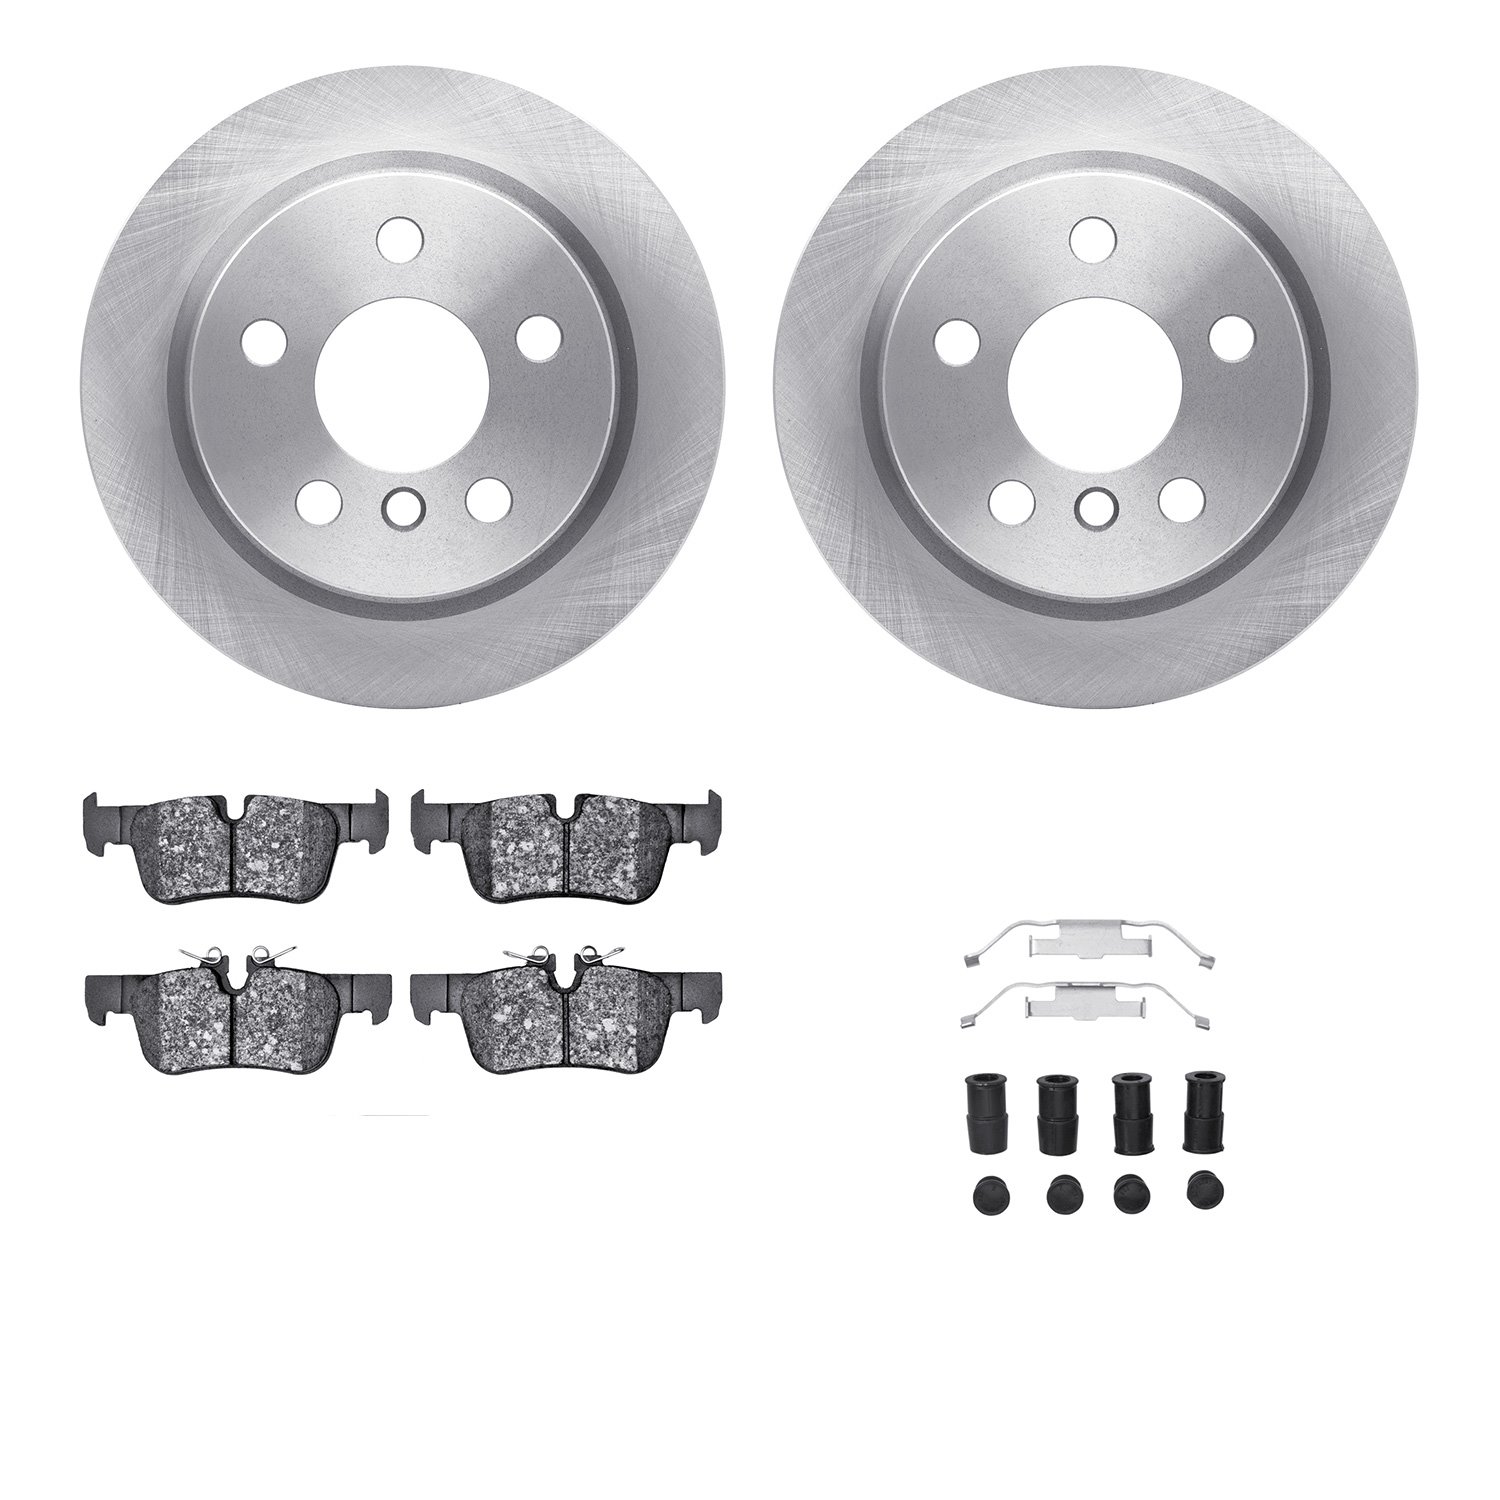 6612-32061 Brake Rotors w/5000 Euro Ceramic Brake Pads Kit with Hardware, Fits Select Multiple Makes/Models, Position: Rear